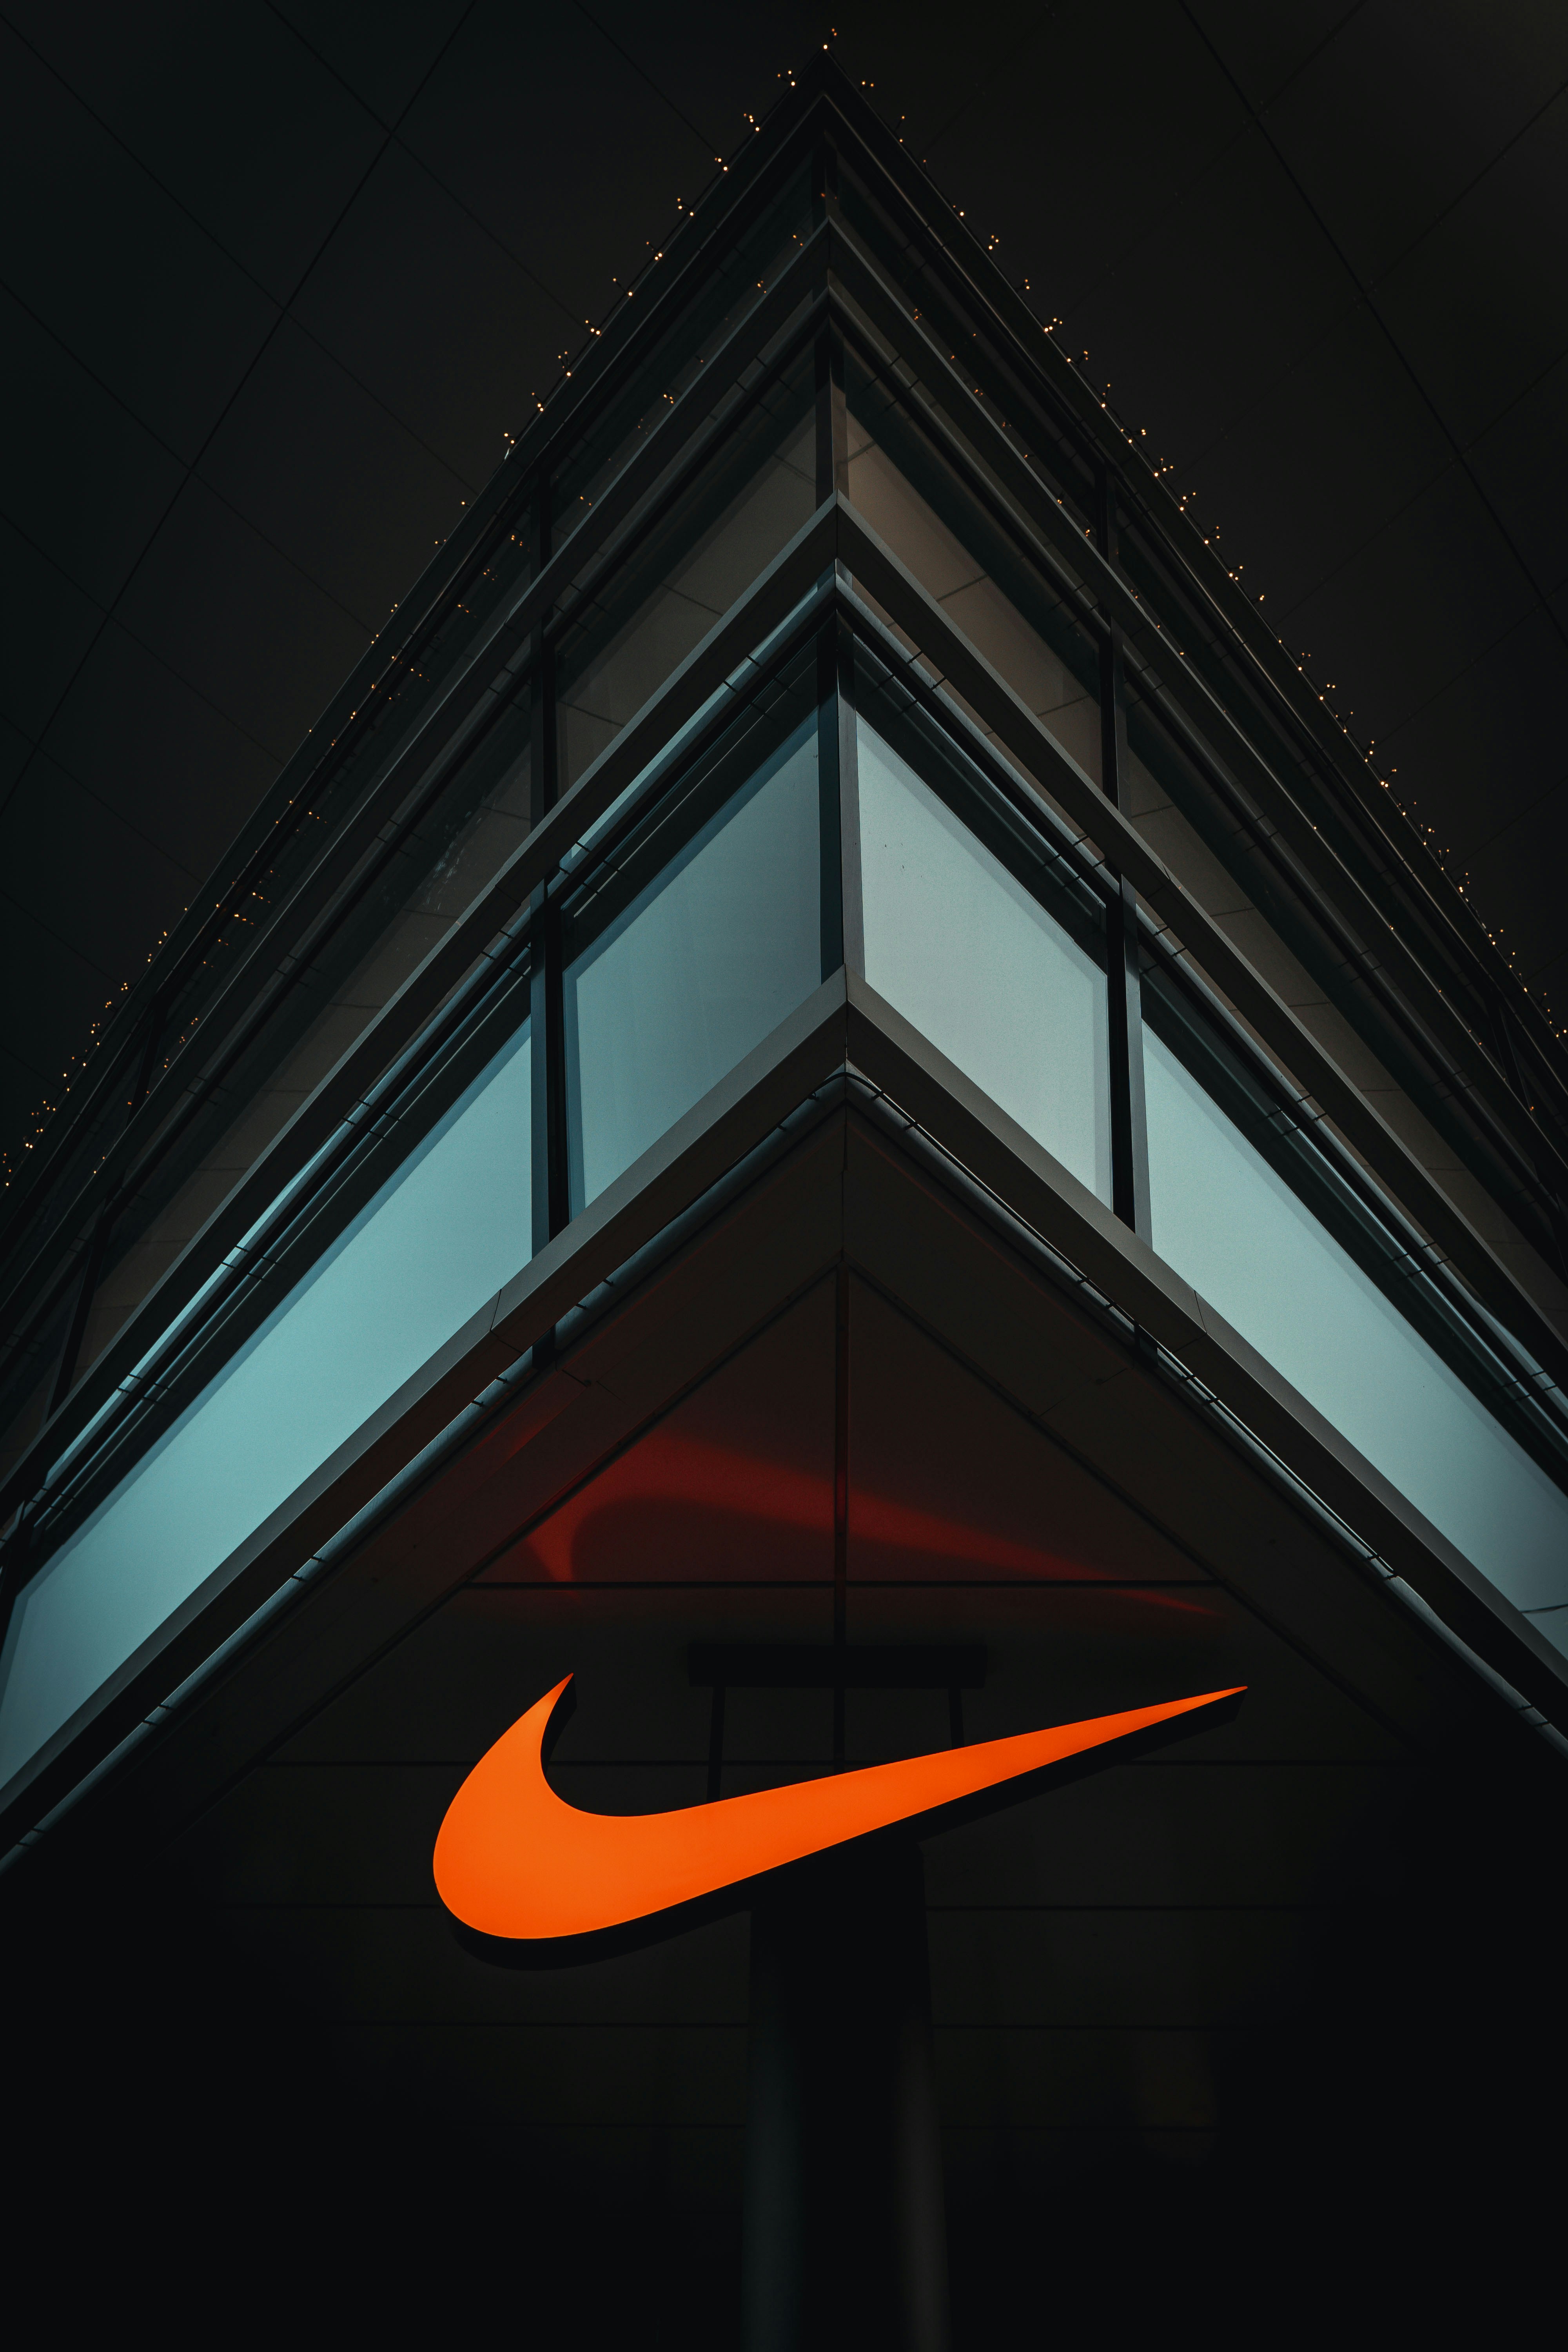 Fondos de pantalla de Nike: Descarga HD gratuita [500+ HQ] | Unsplash (en  inglés)